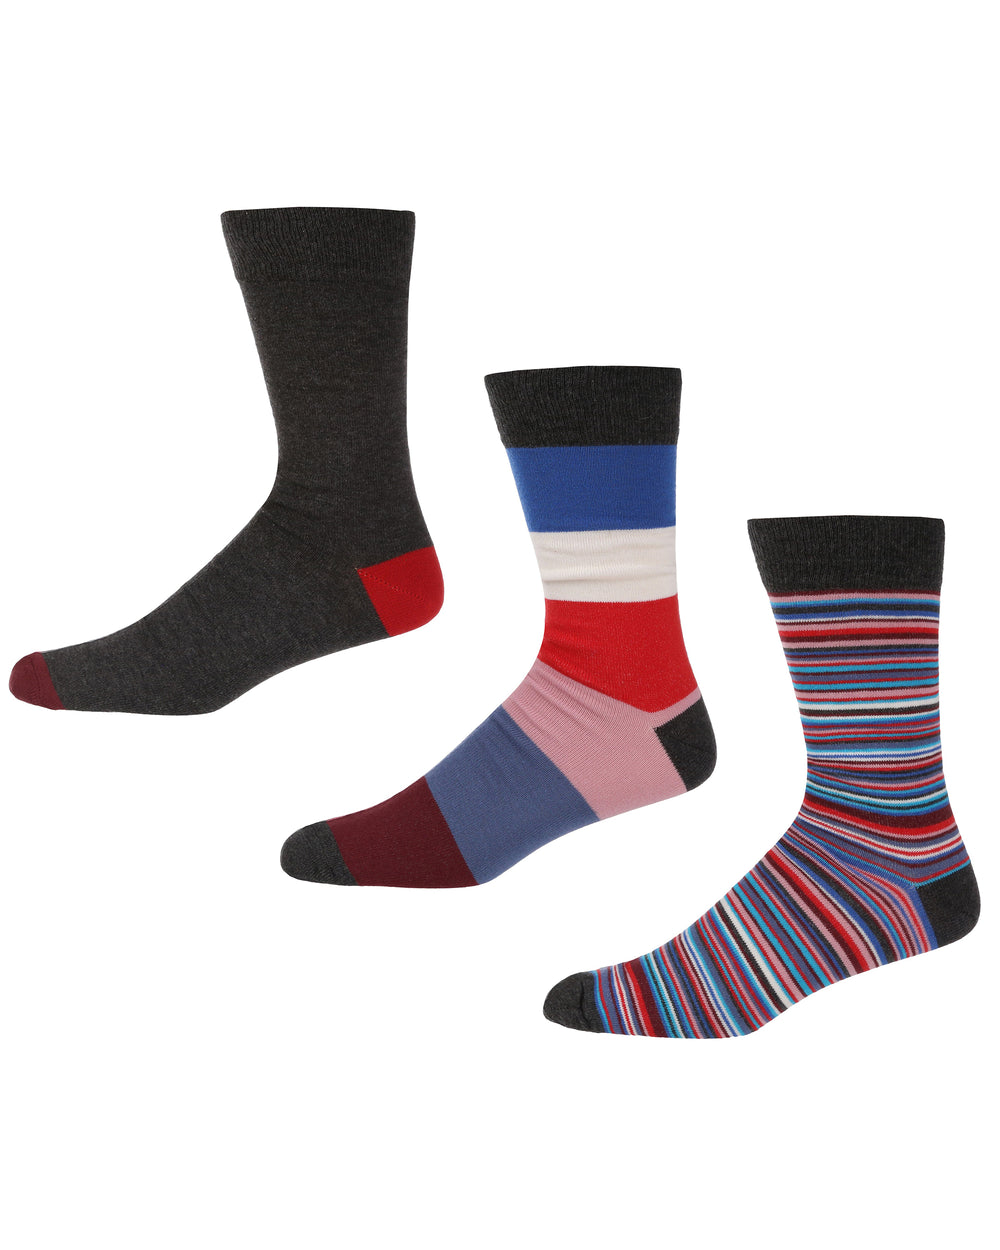 Workforce Men's 3-Pack Socks - Multi Stripe/Charcoal